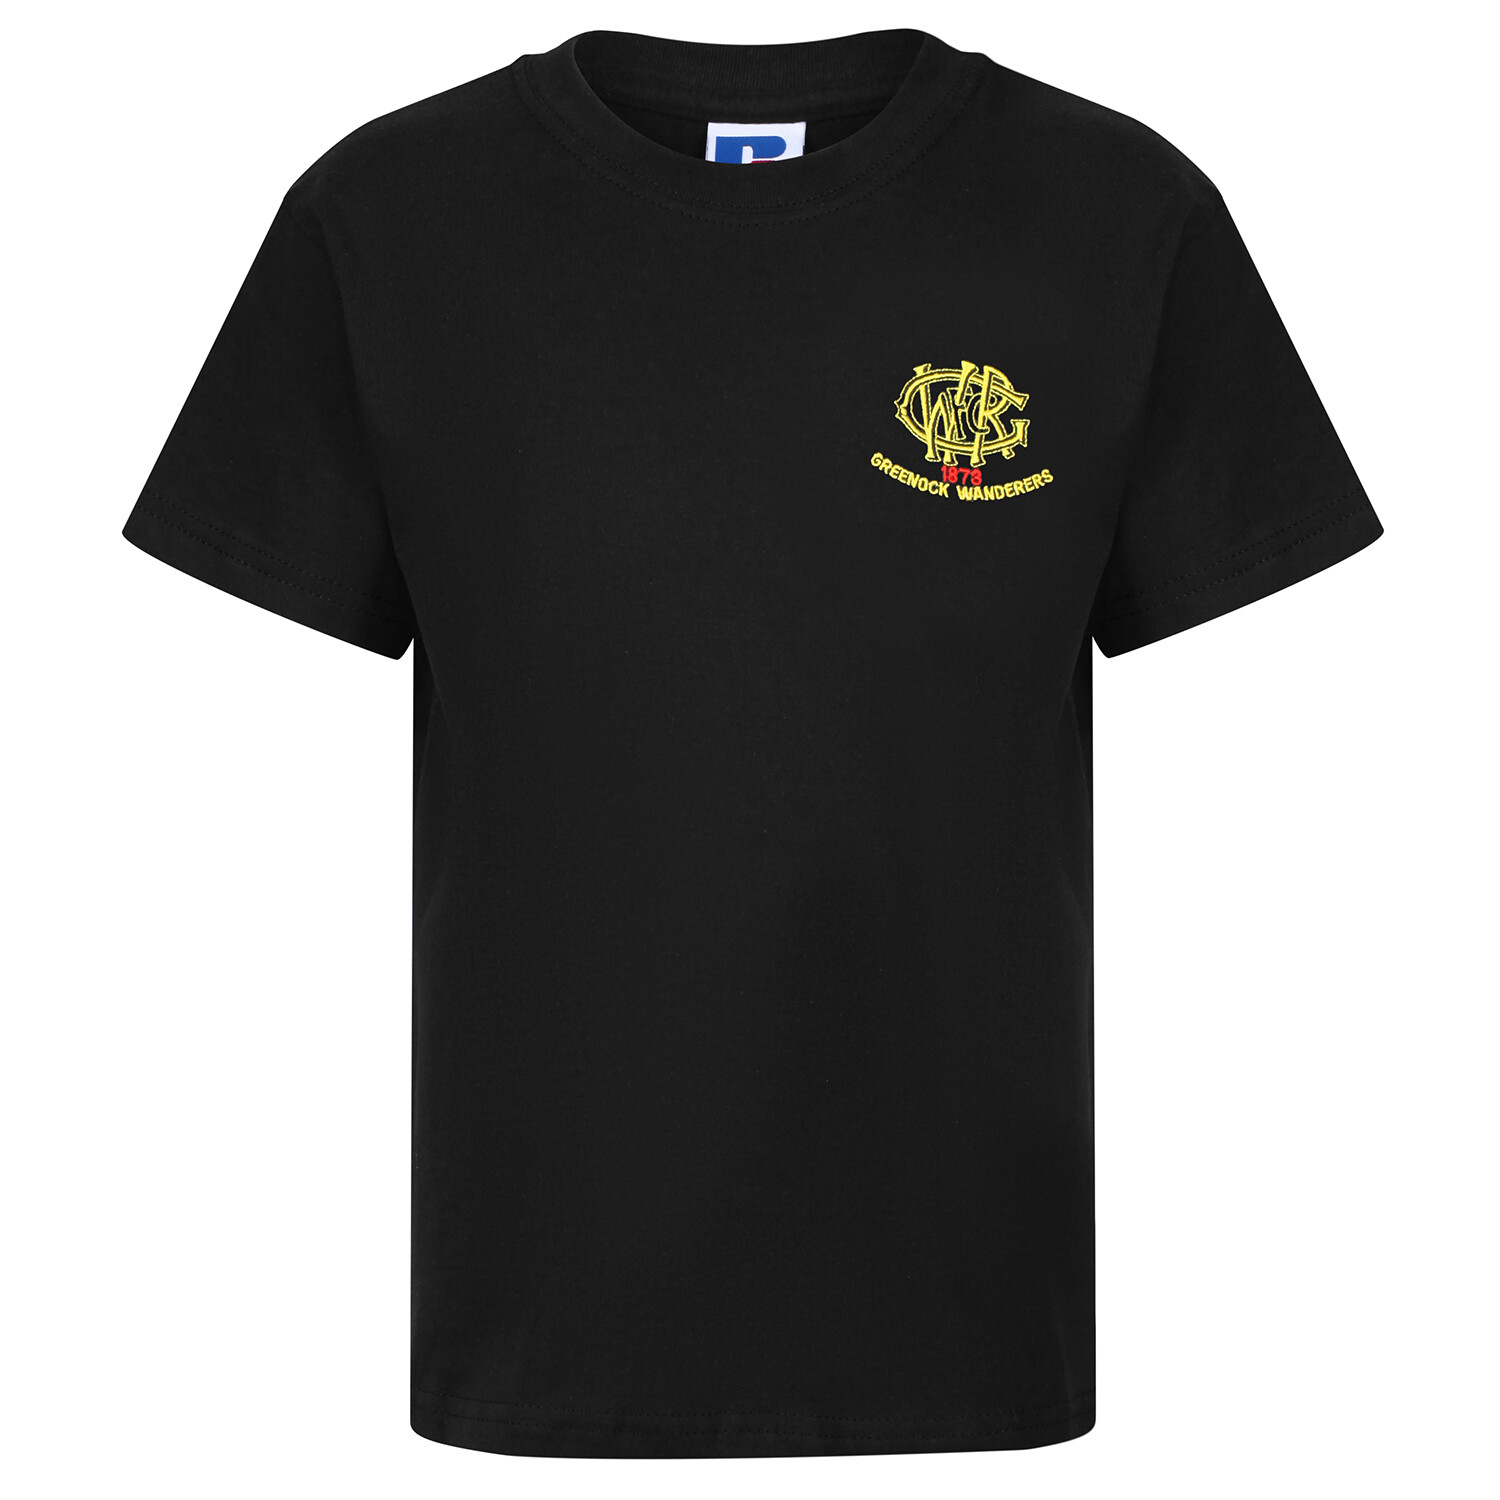 GWRFC Badged T-Shirt in Black (RCSS287X)